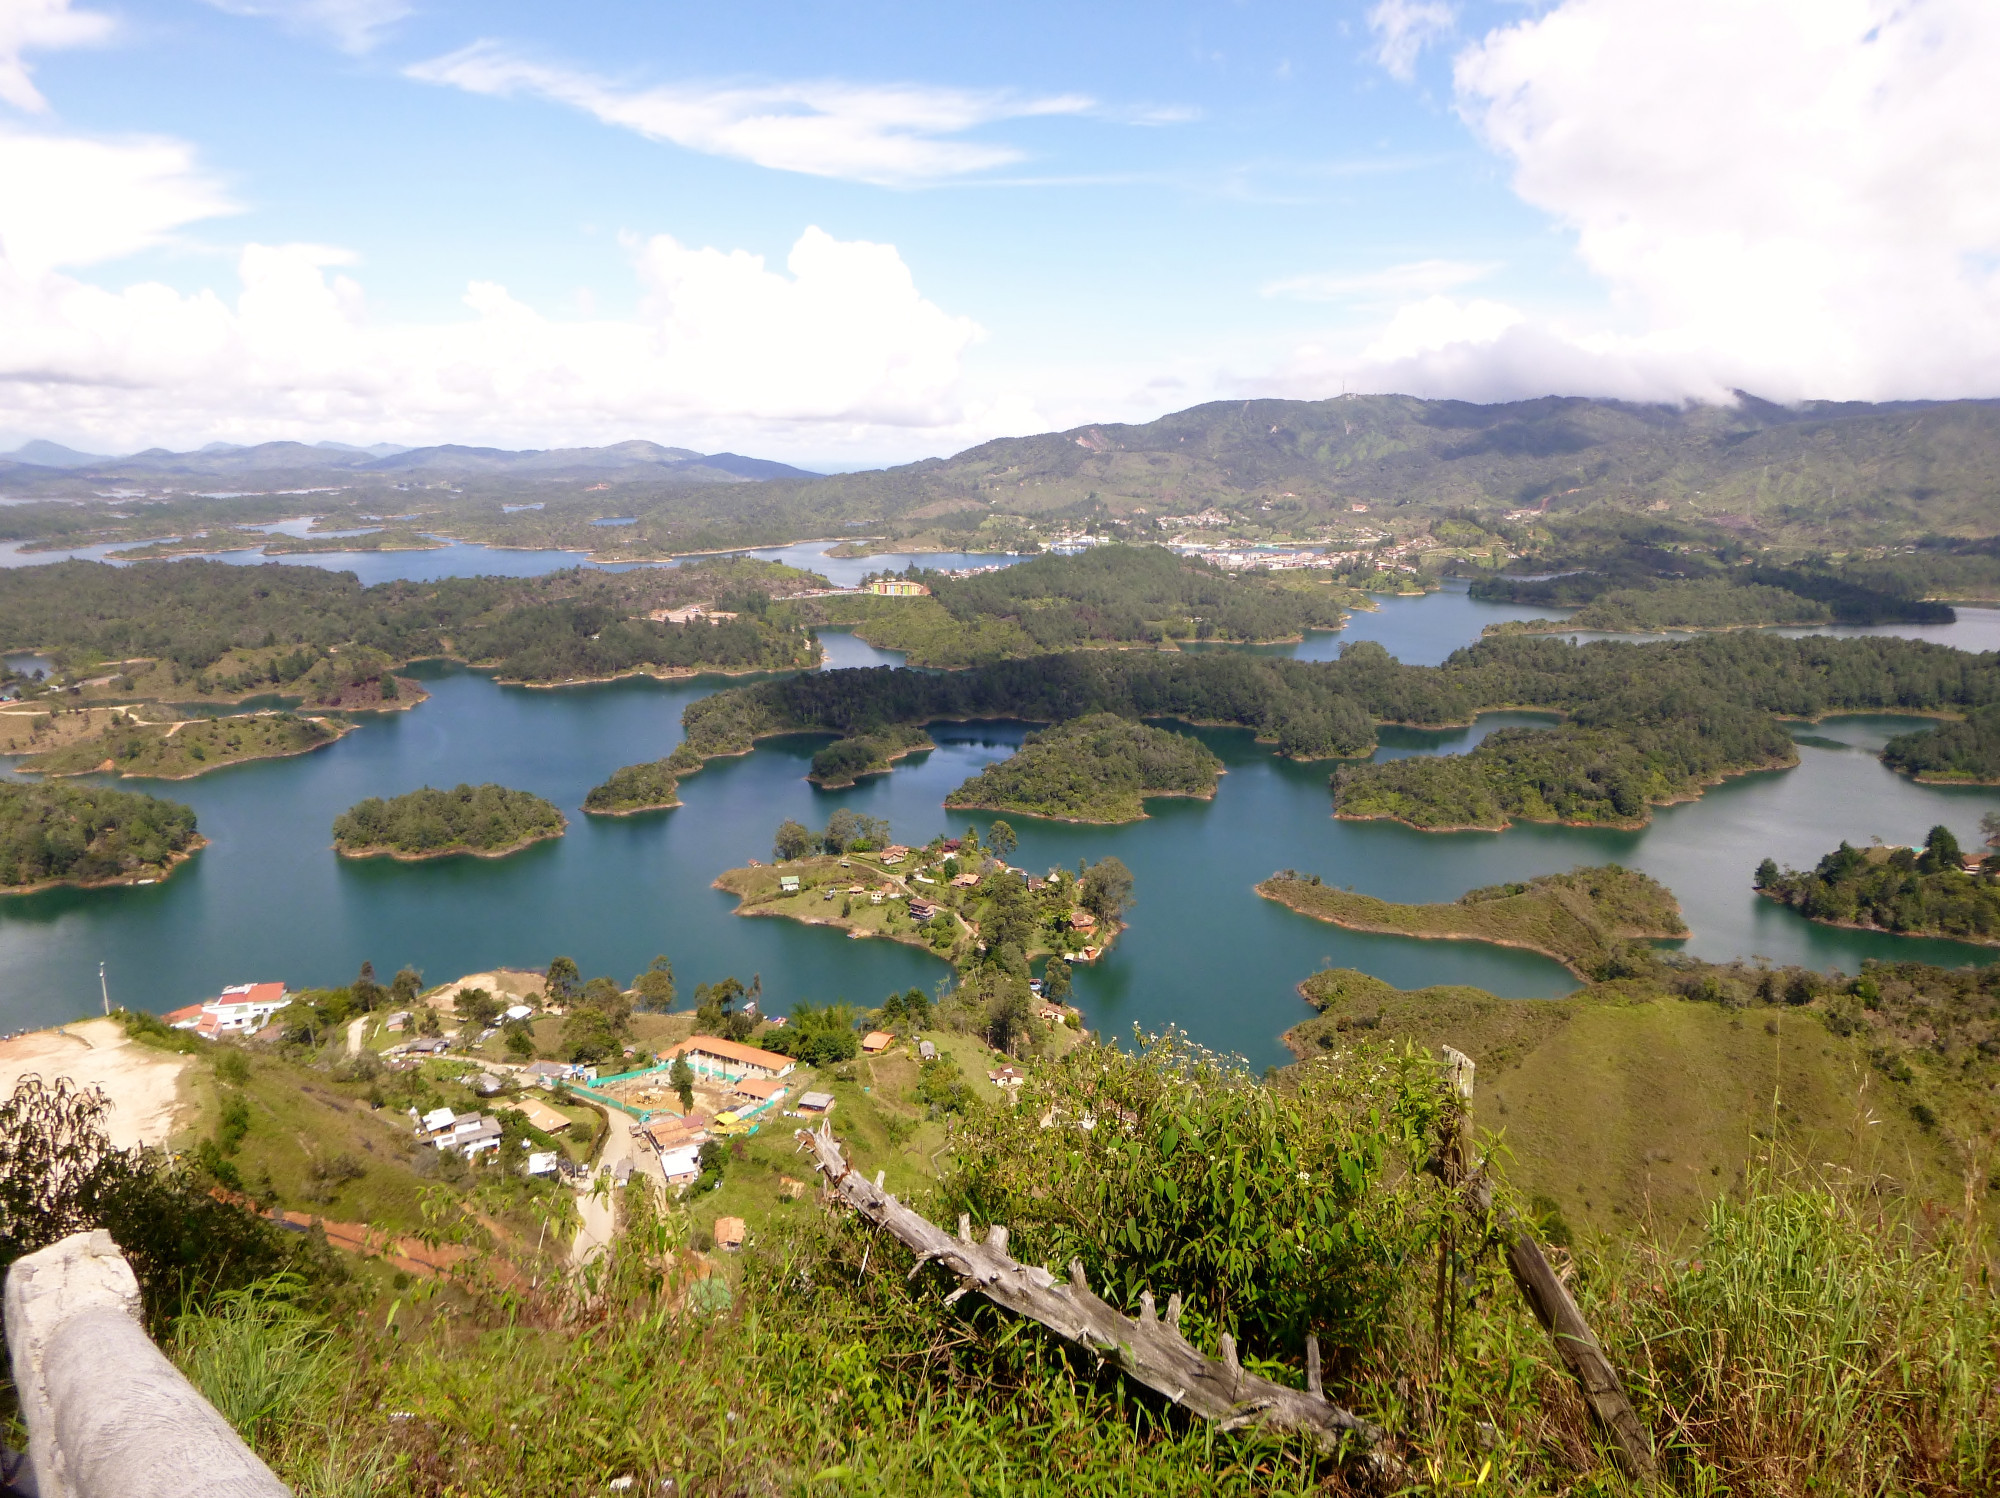 Peñol-Guatapé Reservoir